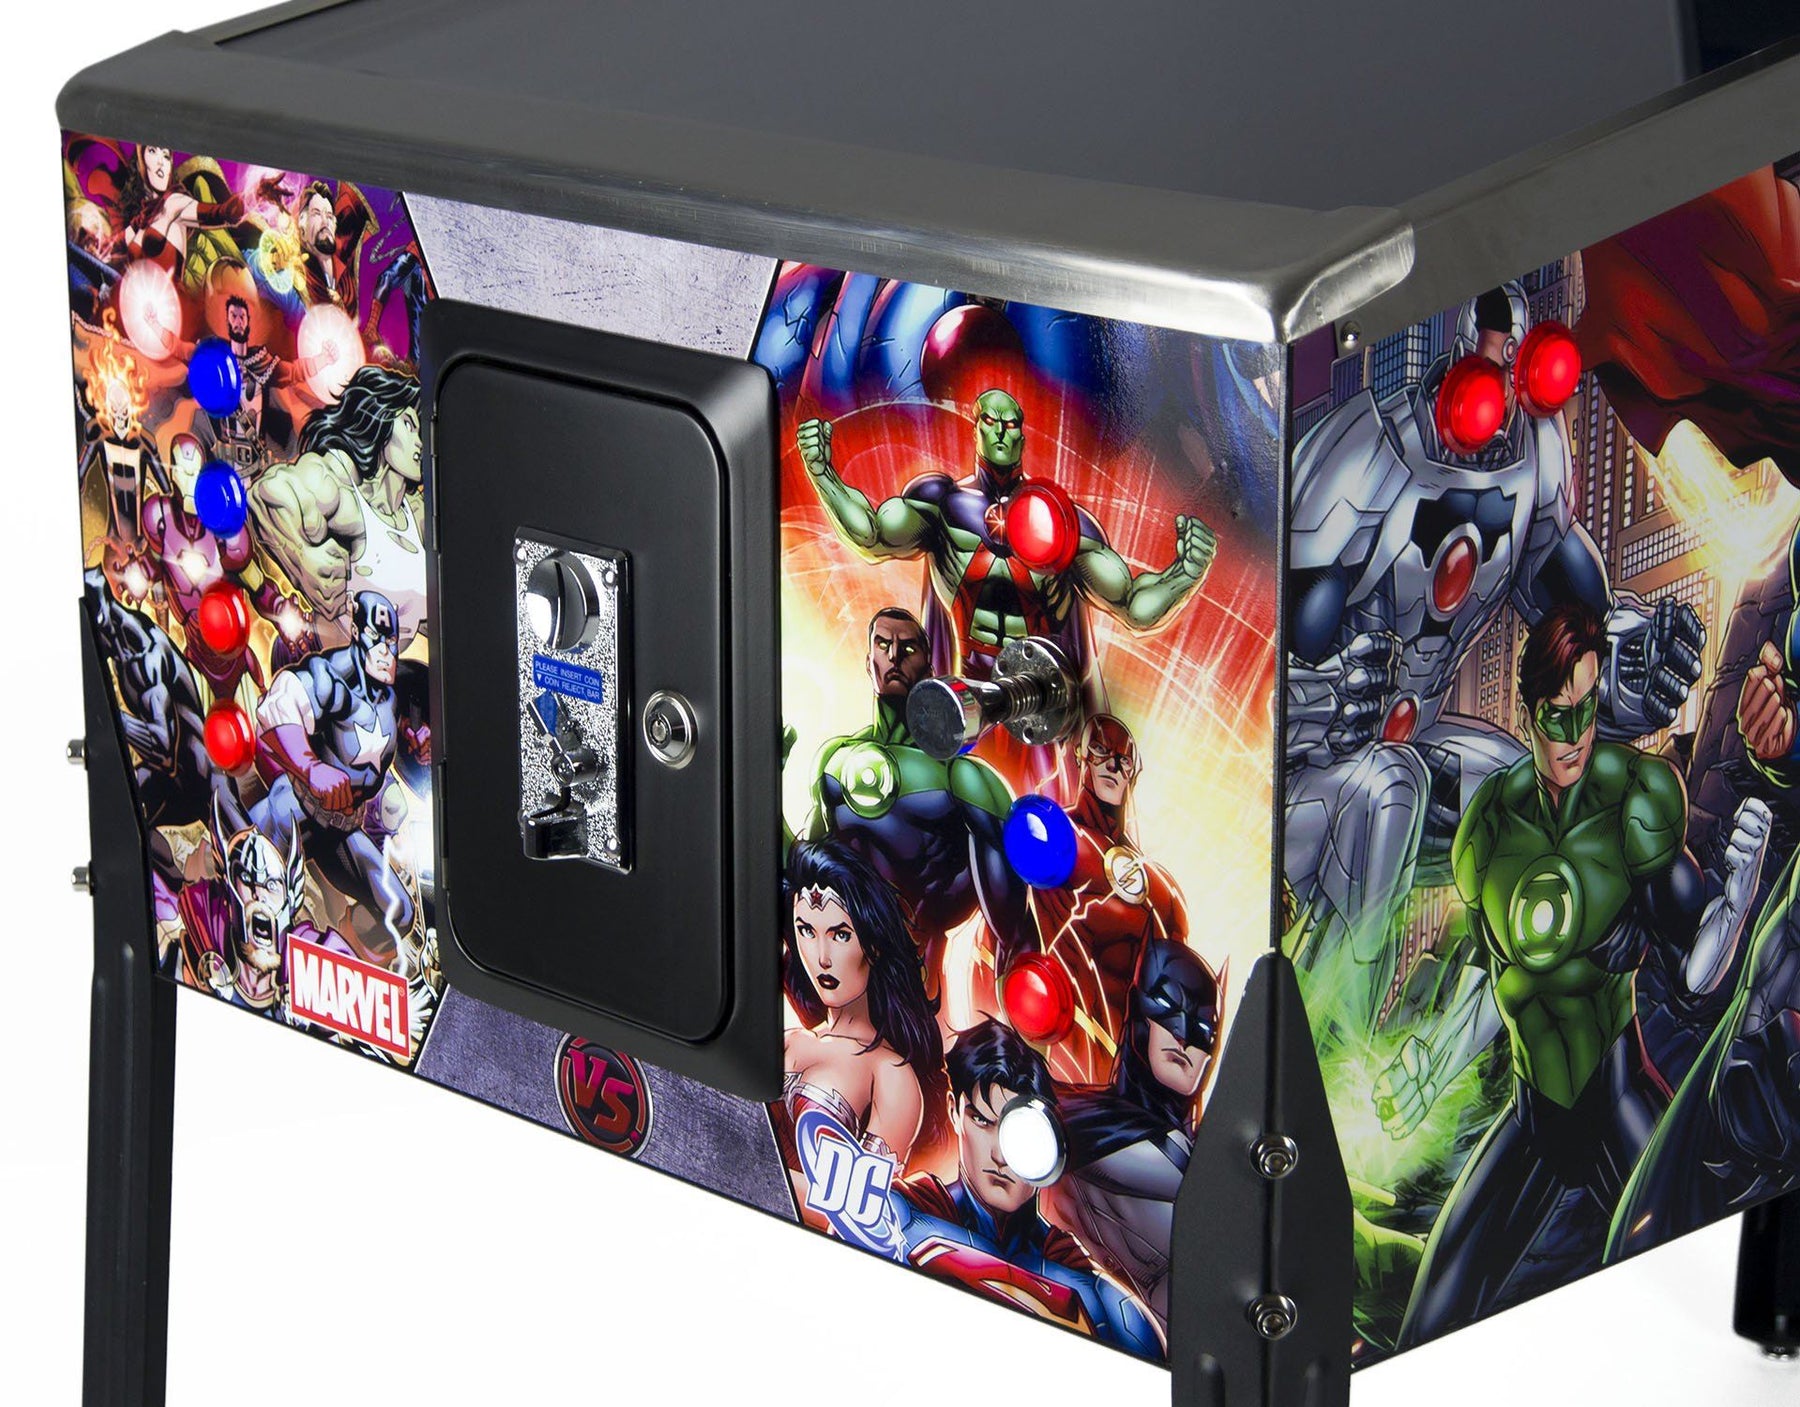 Pinball Machine - Marvel VS DC Virtual Pinball Machine 1080 Games Included